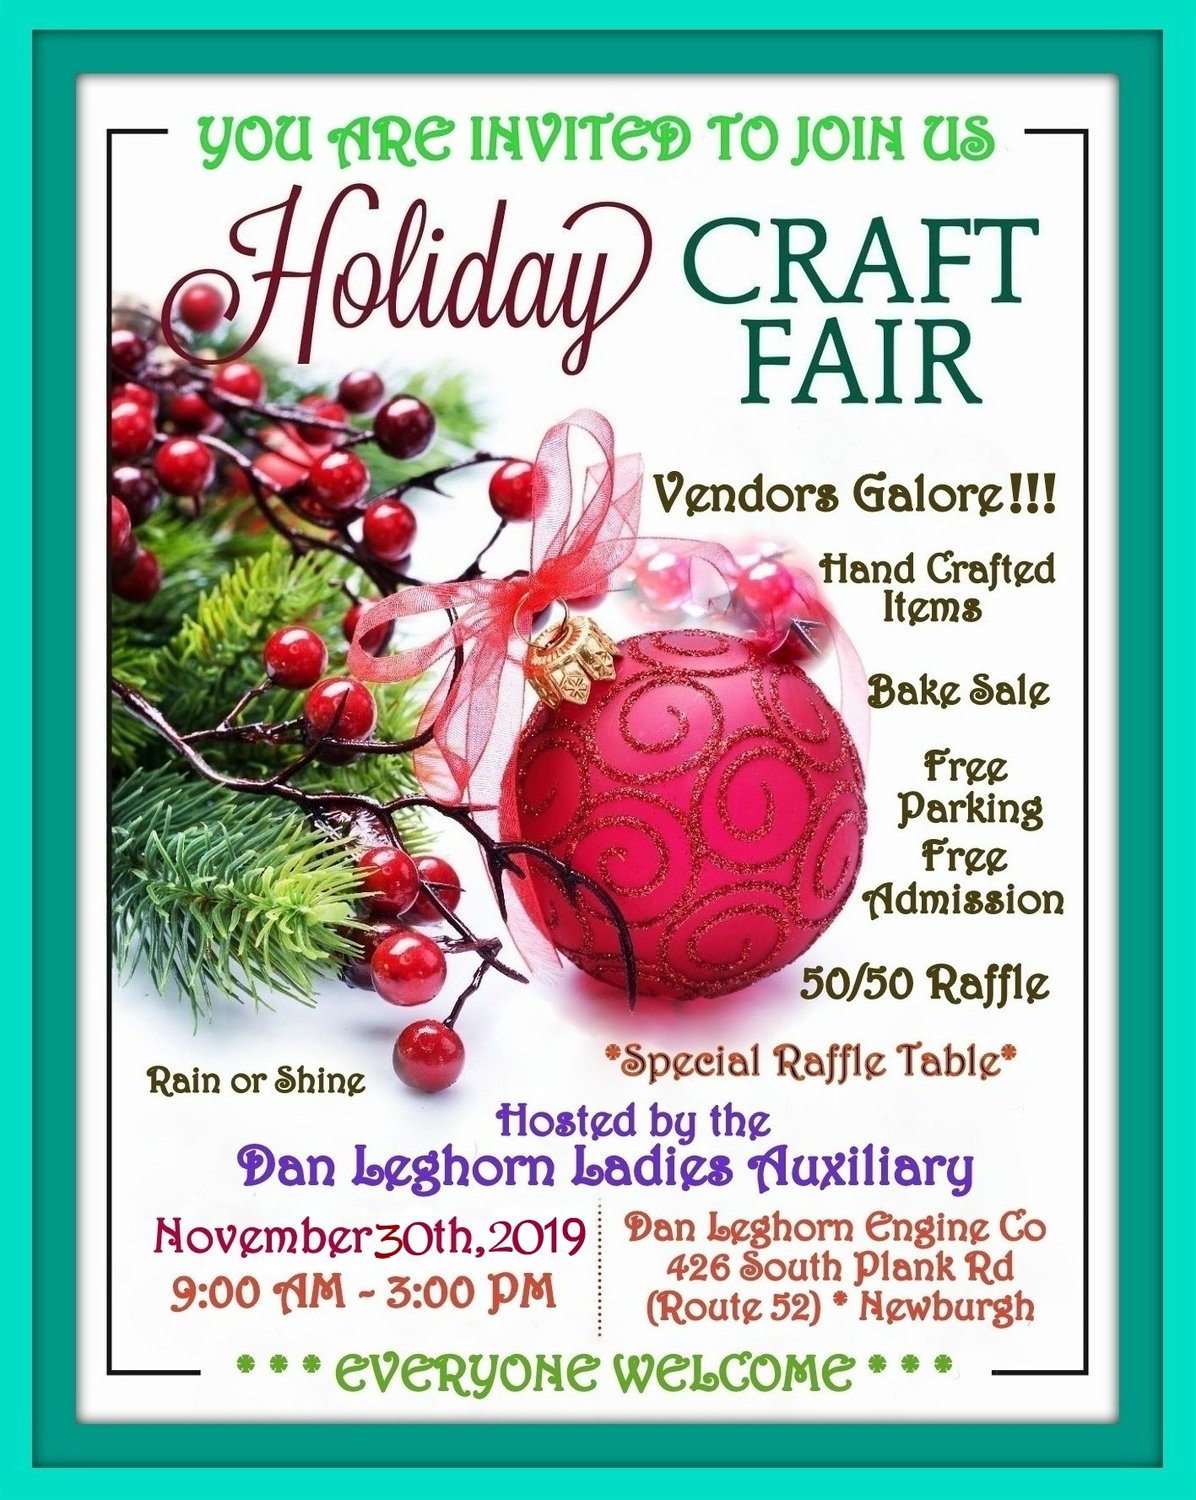 2019 Dan Leghorn Ladies Auxiliary Holiday Craft Vendor Fair My Hudson Valley